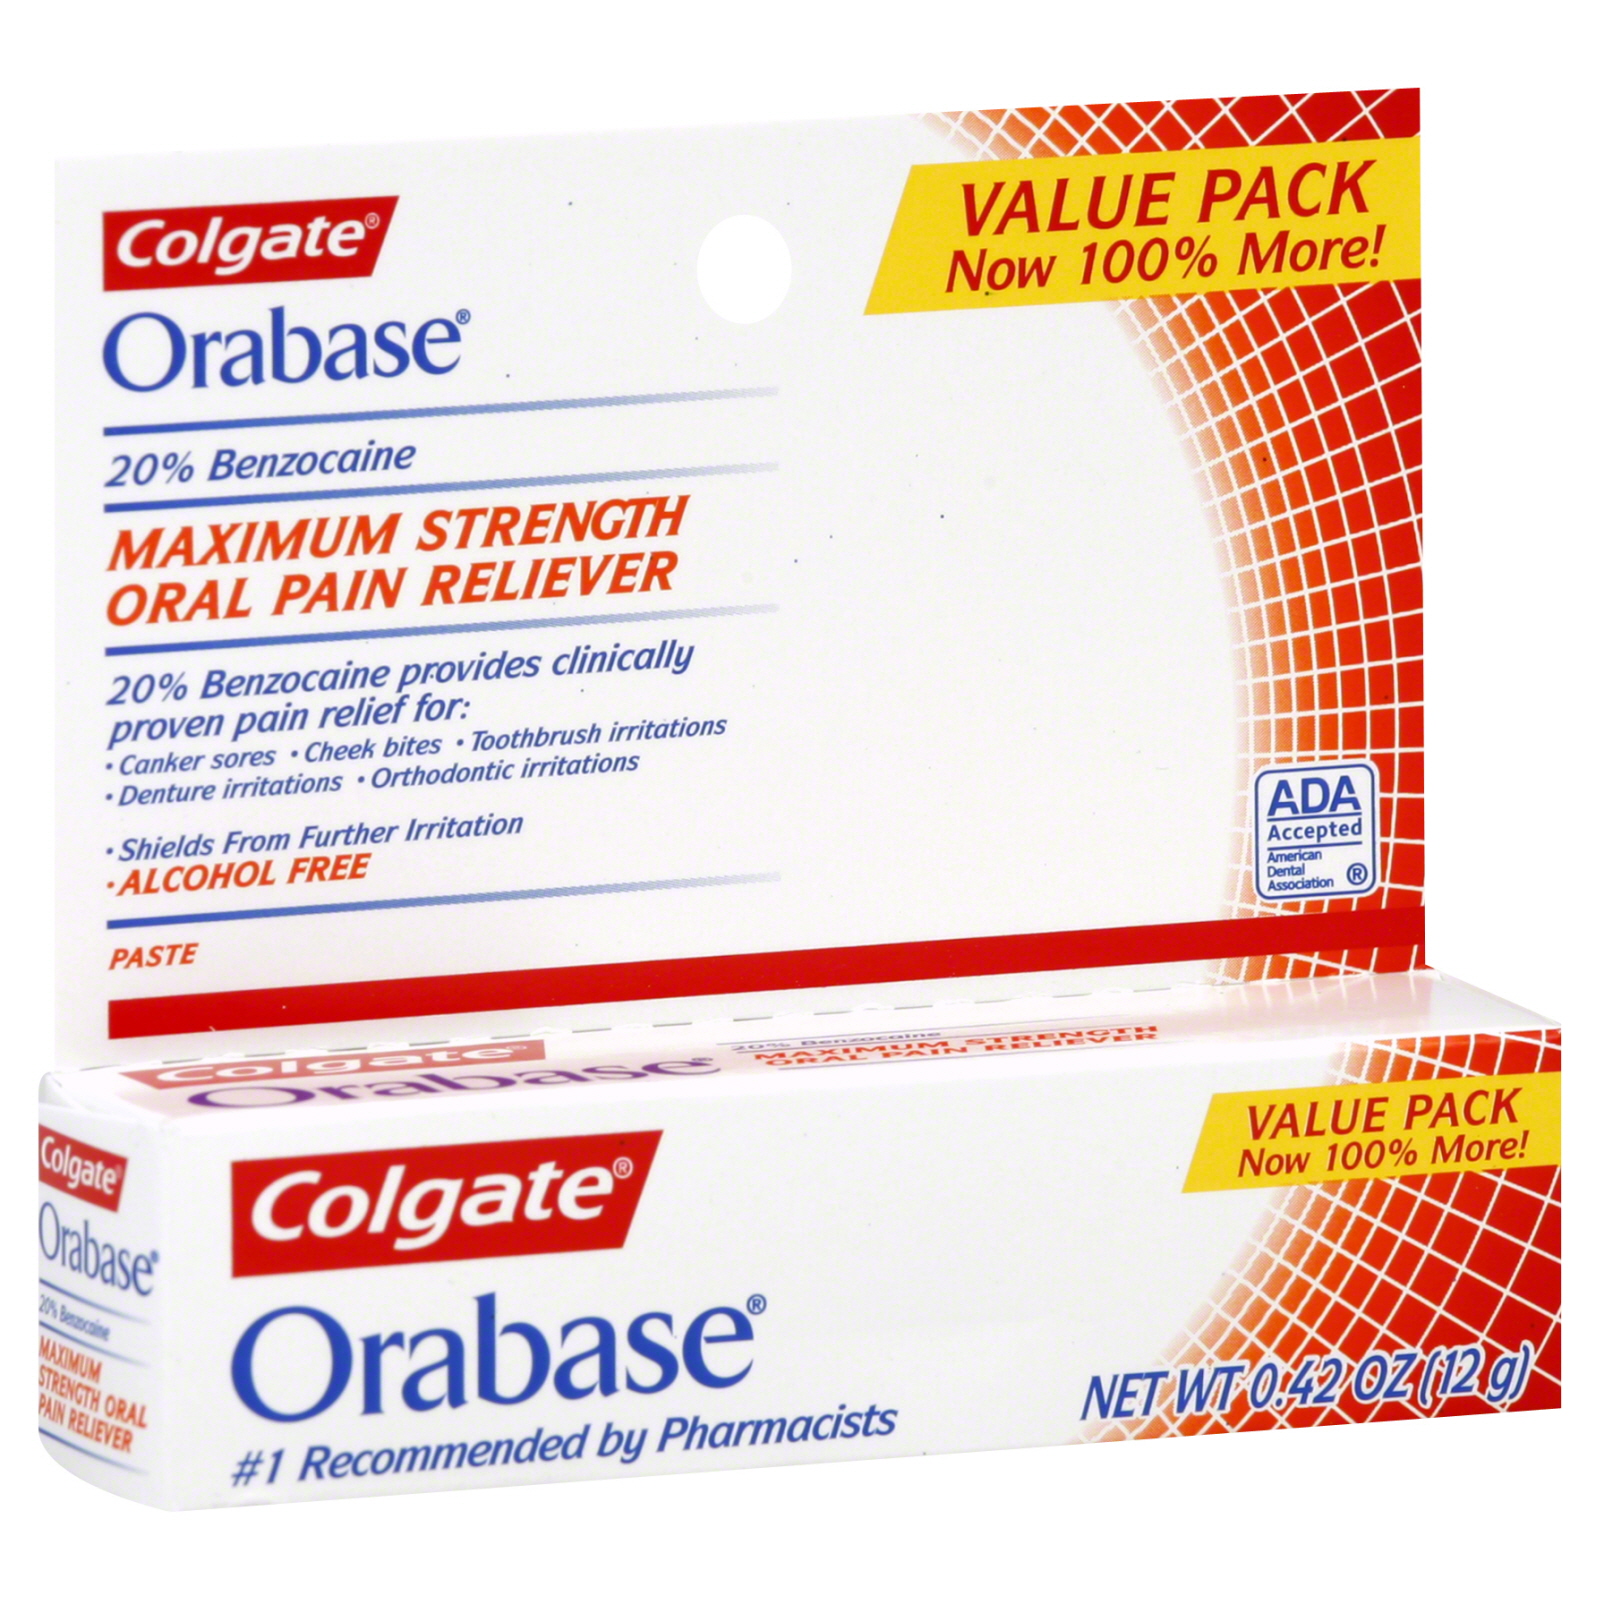 Colgate-Palmolive Orabase Oral Pain Reliever, Maximum Strength, Paste, Value Pack 0.42 oz (12 g)